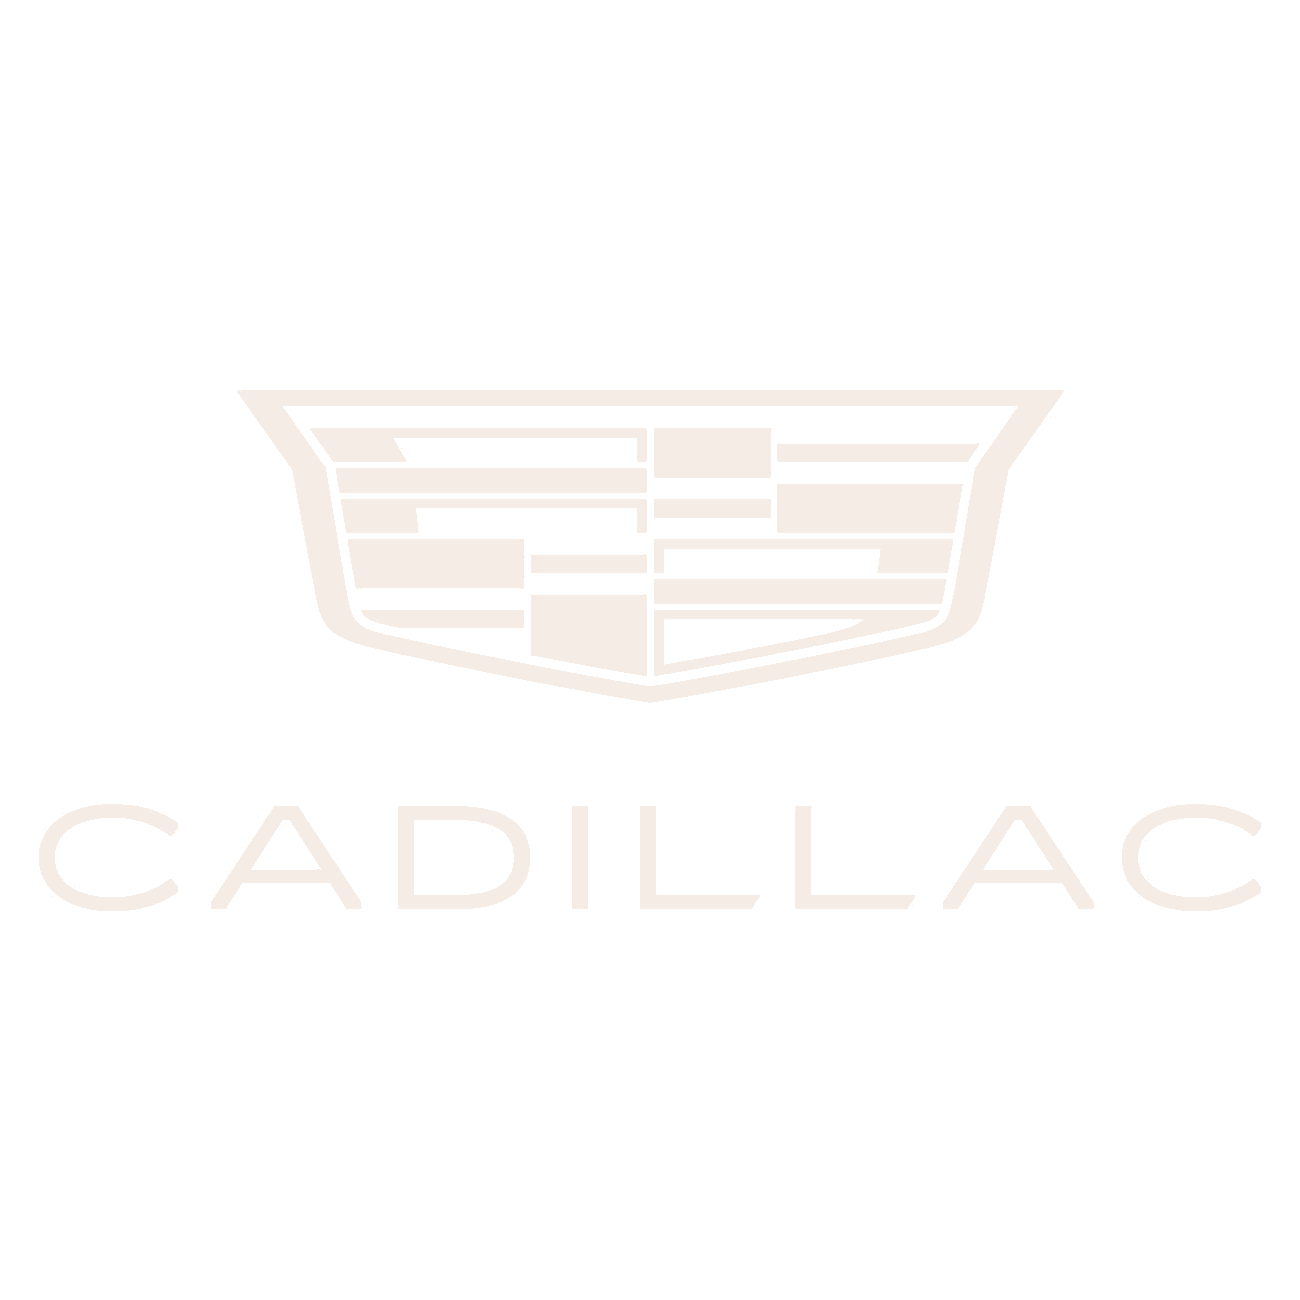 Cadillac Logo Web